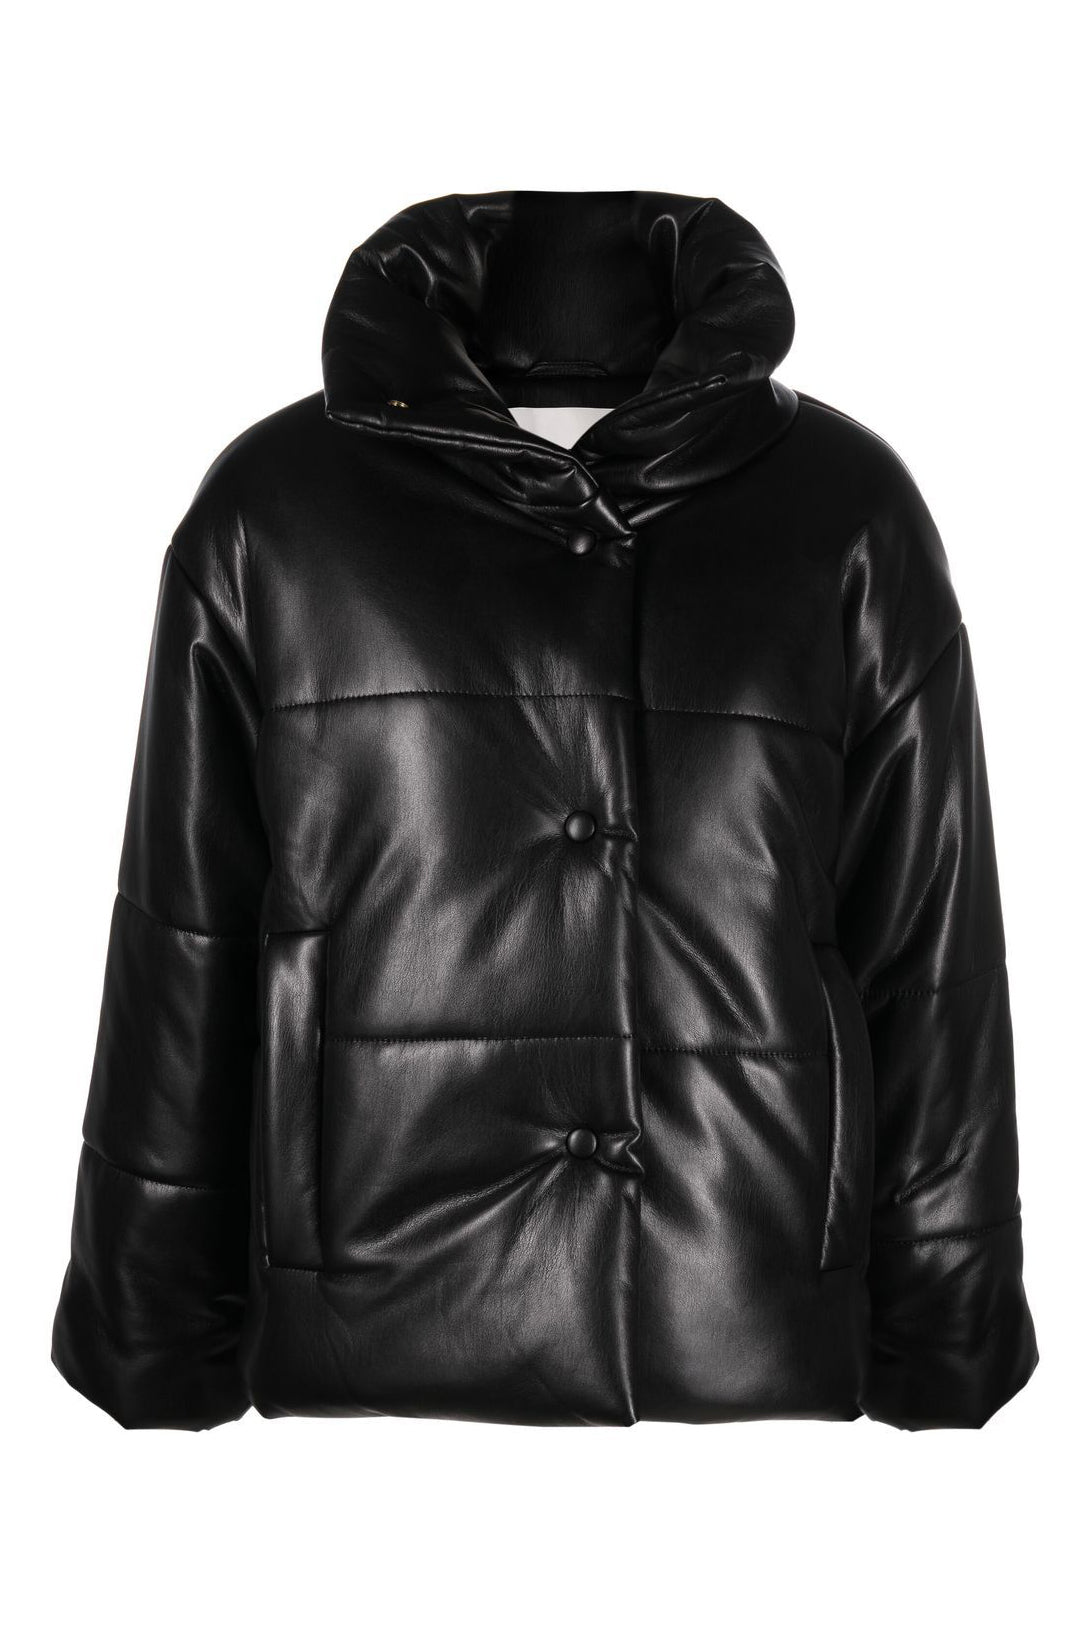 Hide vegan leather puffer jacket, black